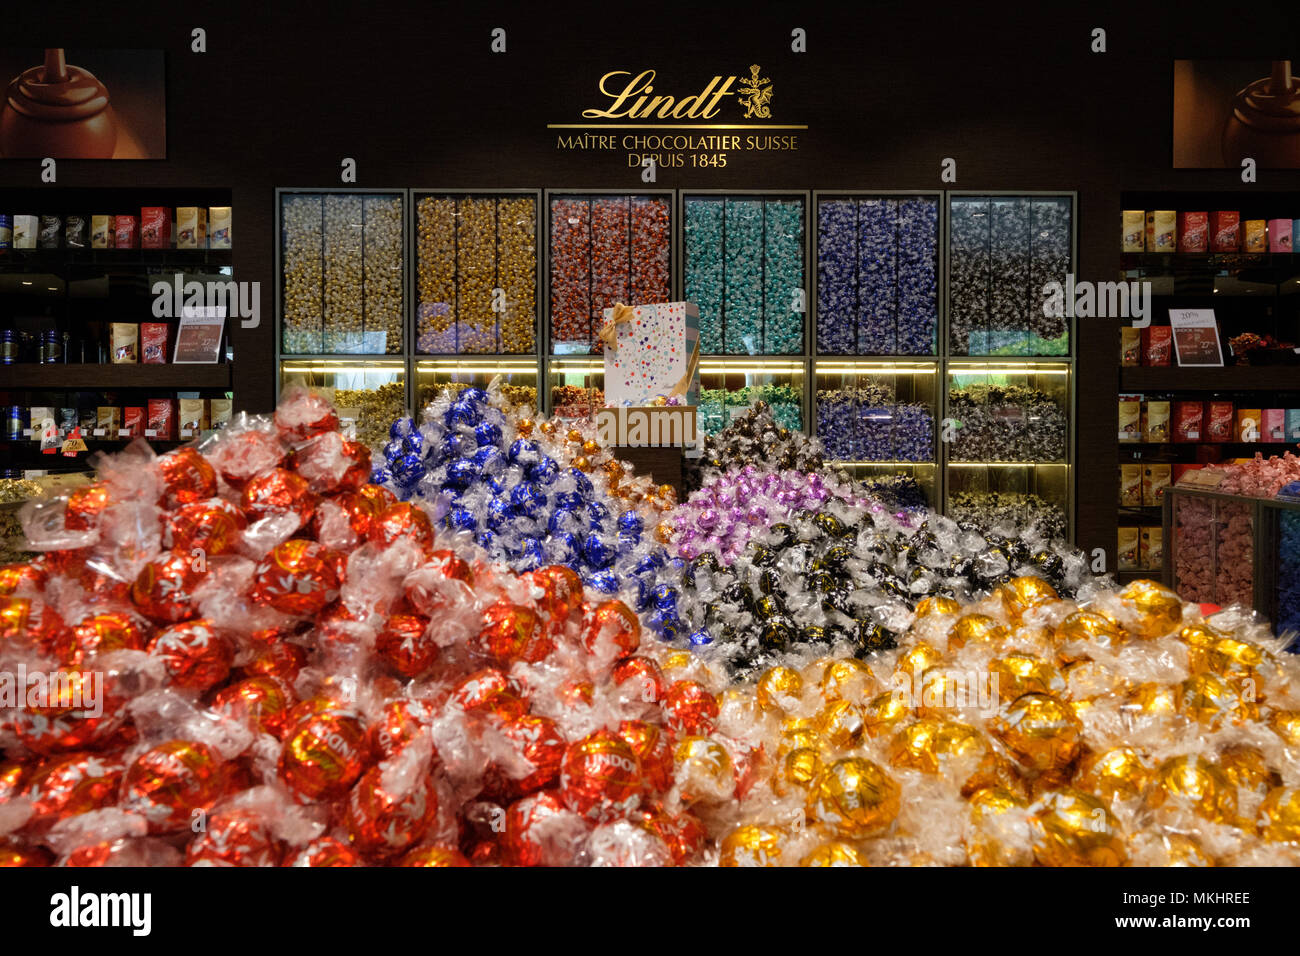 Lindt Chocolate Factory Shop in Zürich, Schweiz, Europa Stockfotografie -  Alamy